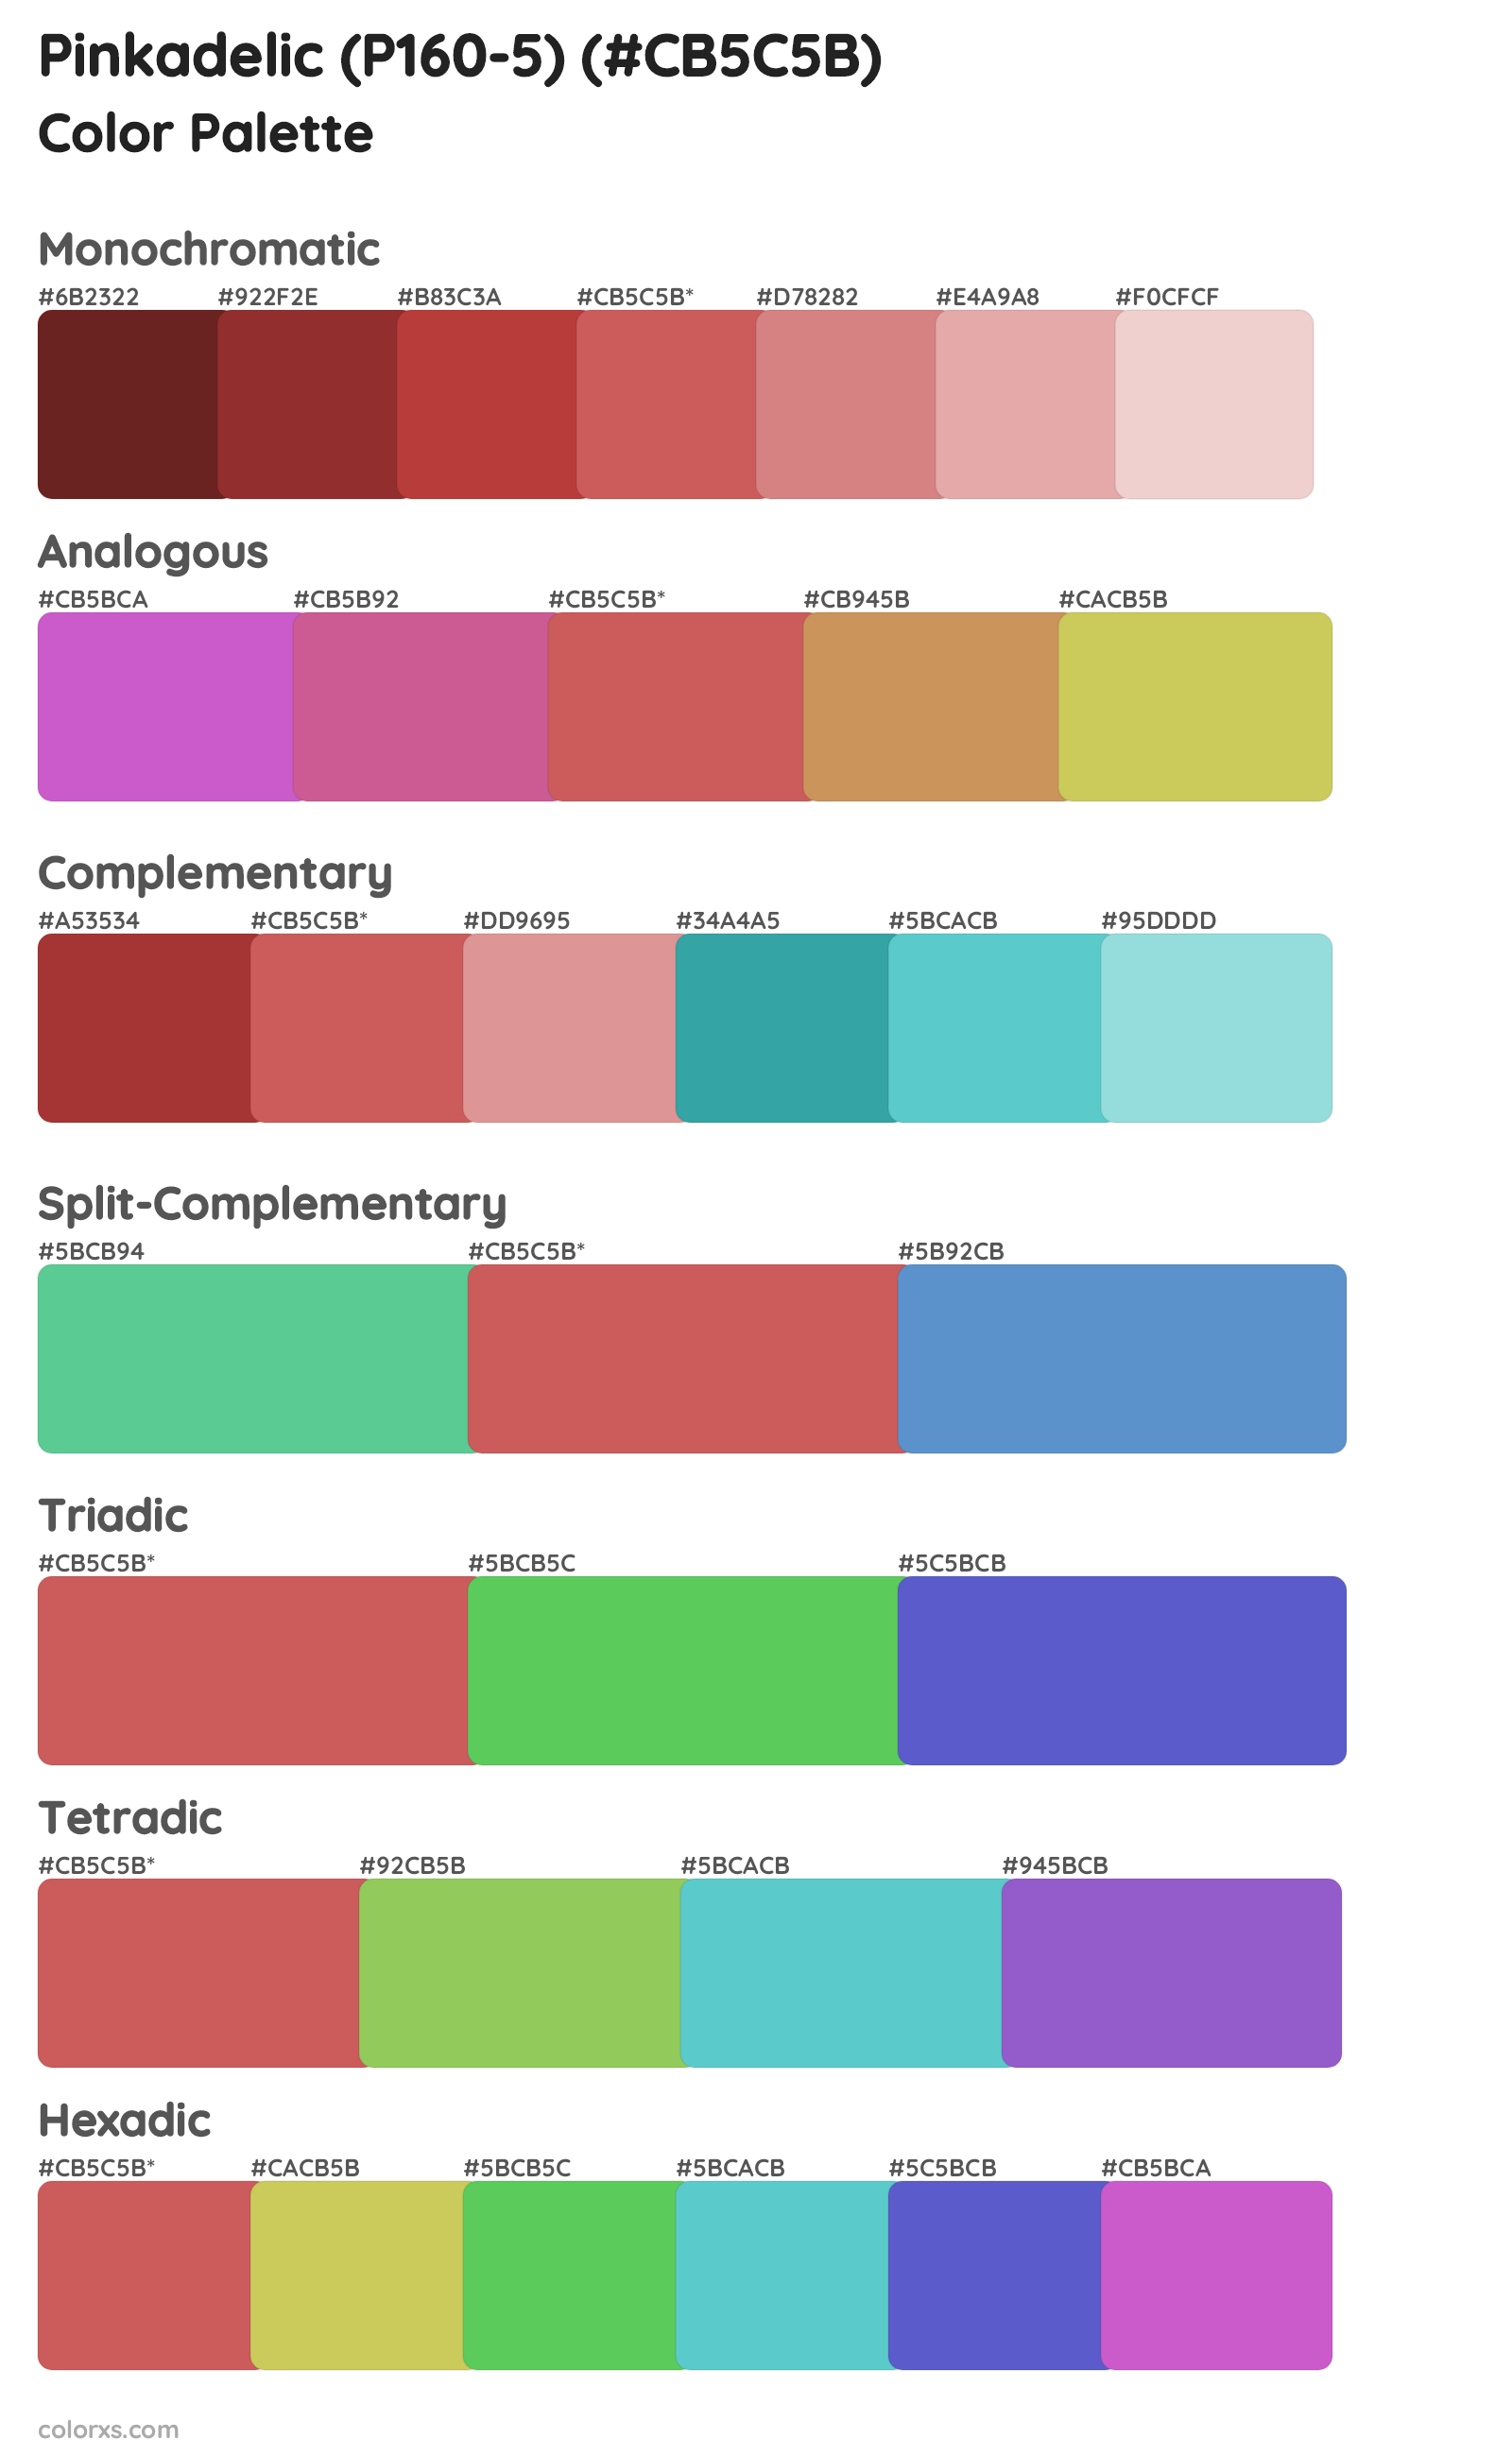 Pinkadelic (P160-5) Color Scheme Palettes